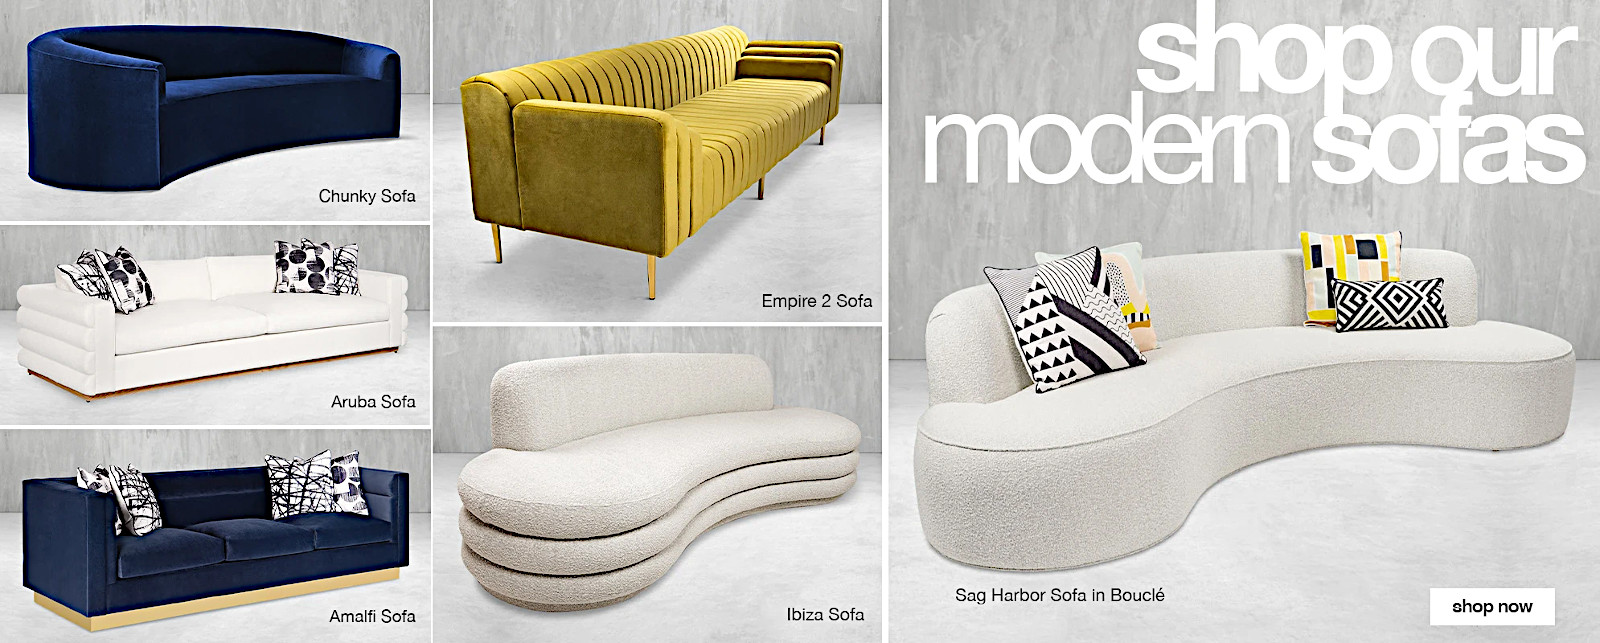 Popularly Priced modern sofas